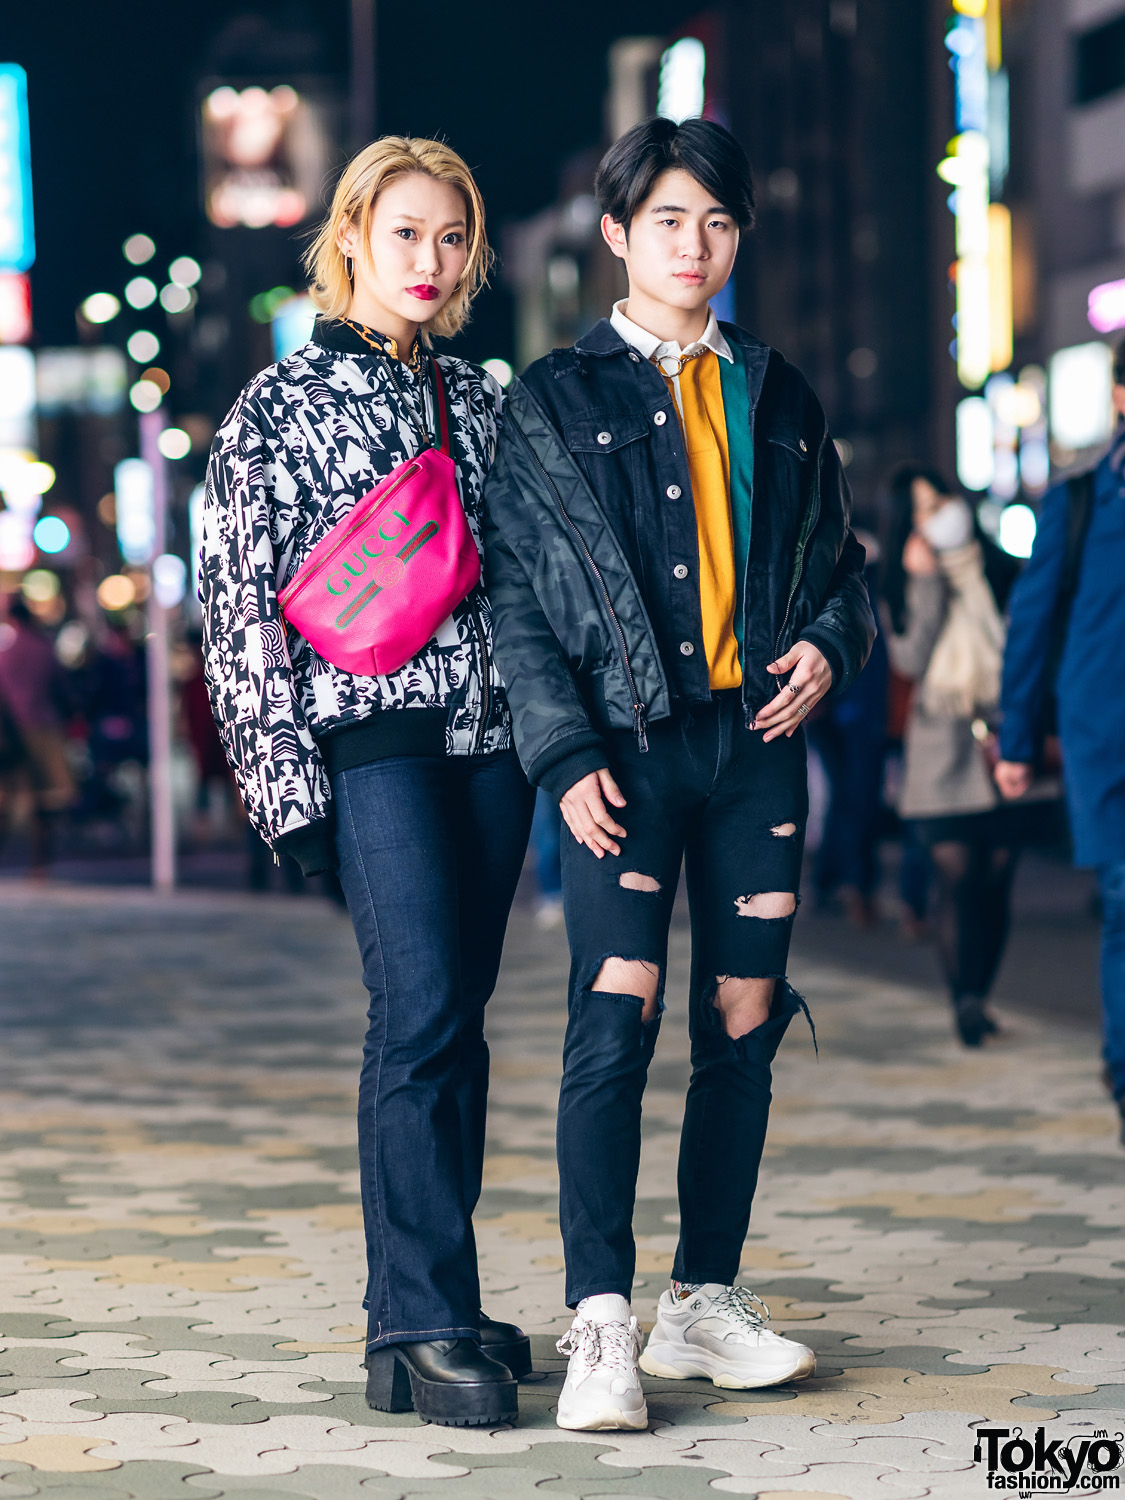 Tokyo Street Fashion w/ Hysteric Glamour, Joyrich, Diesel, Gucci, UNIF, NYS, Union, Pinnap, Brandblack & Never Mind the XU